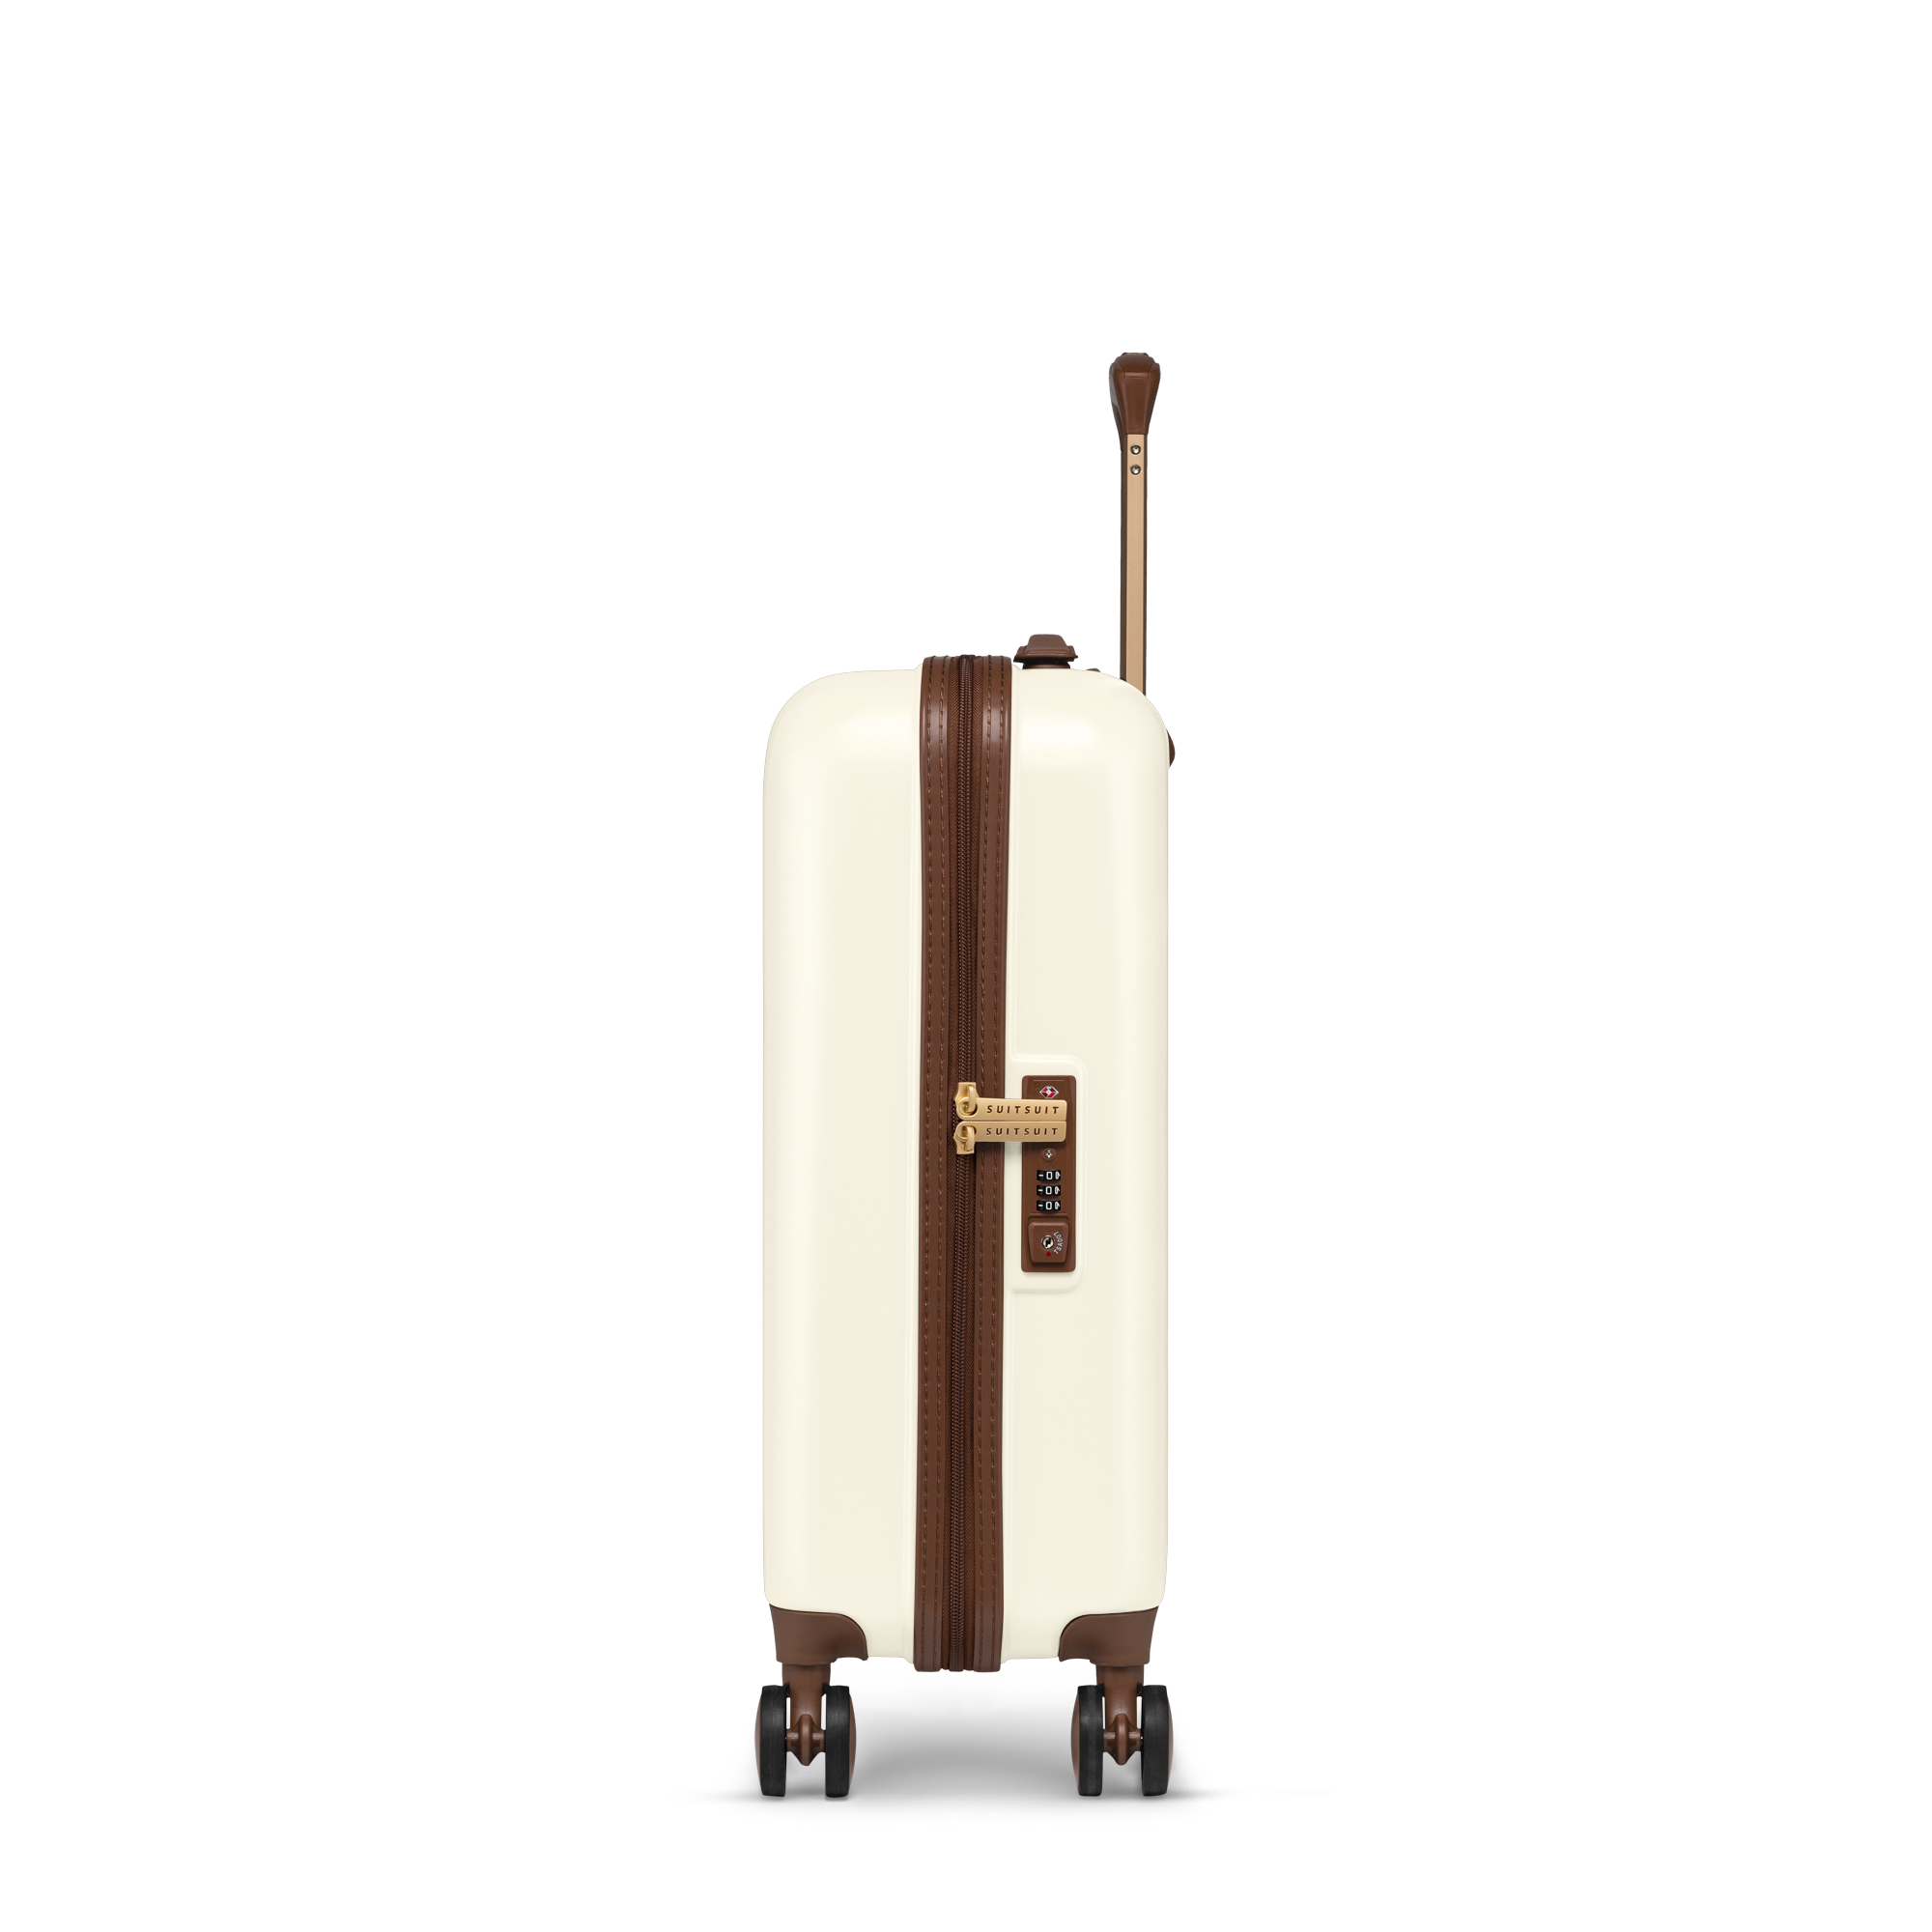 Fab Seventies - Antique White - Handbagage (55 cm)